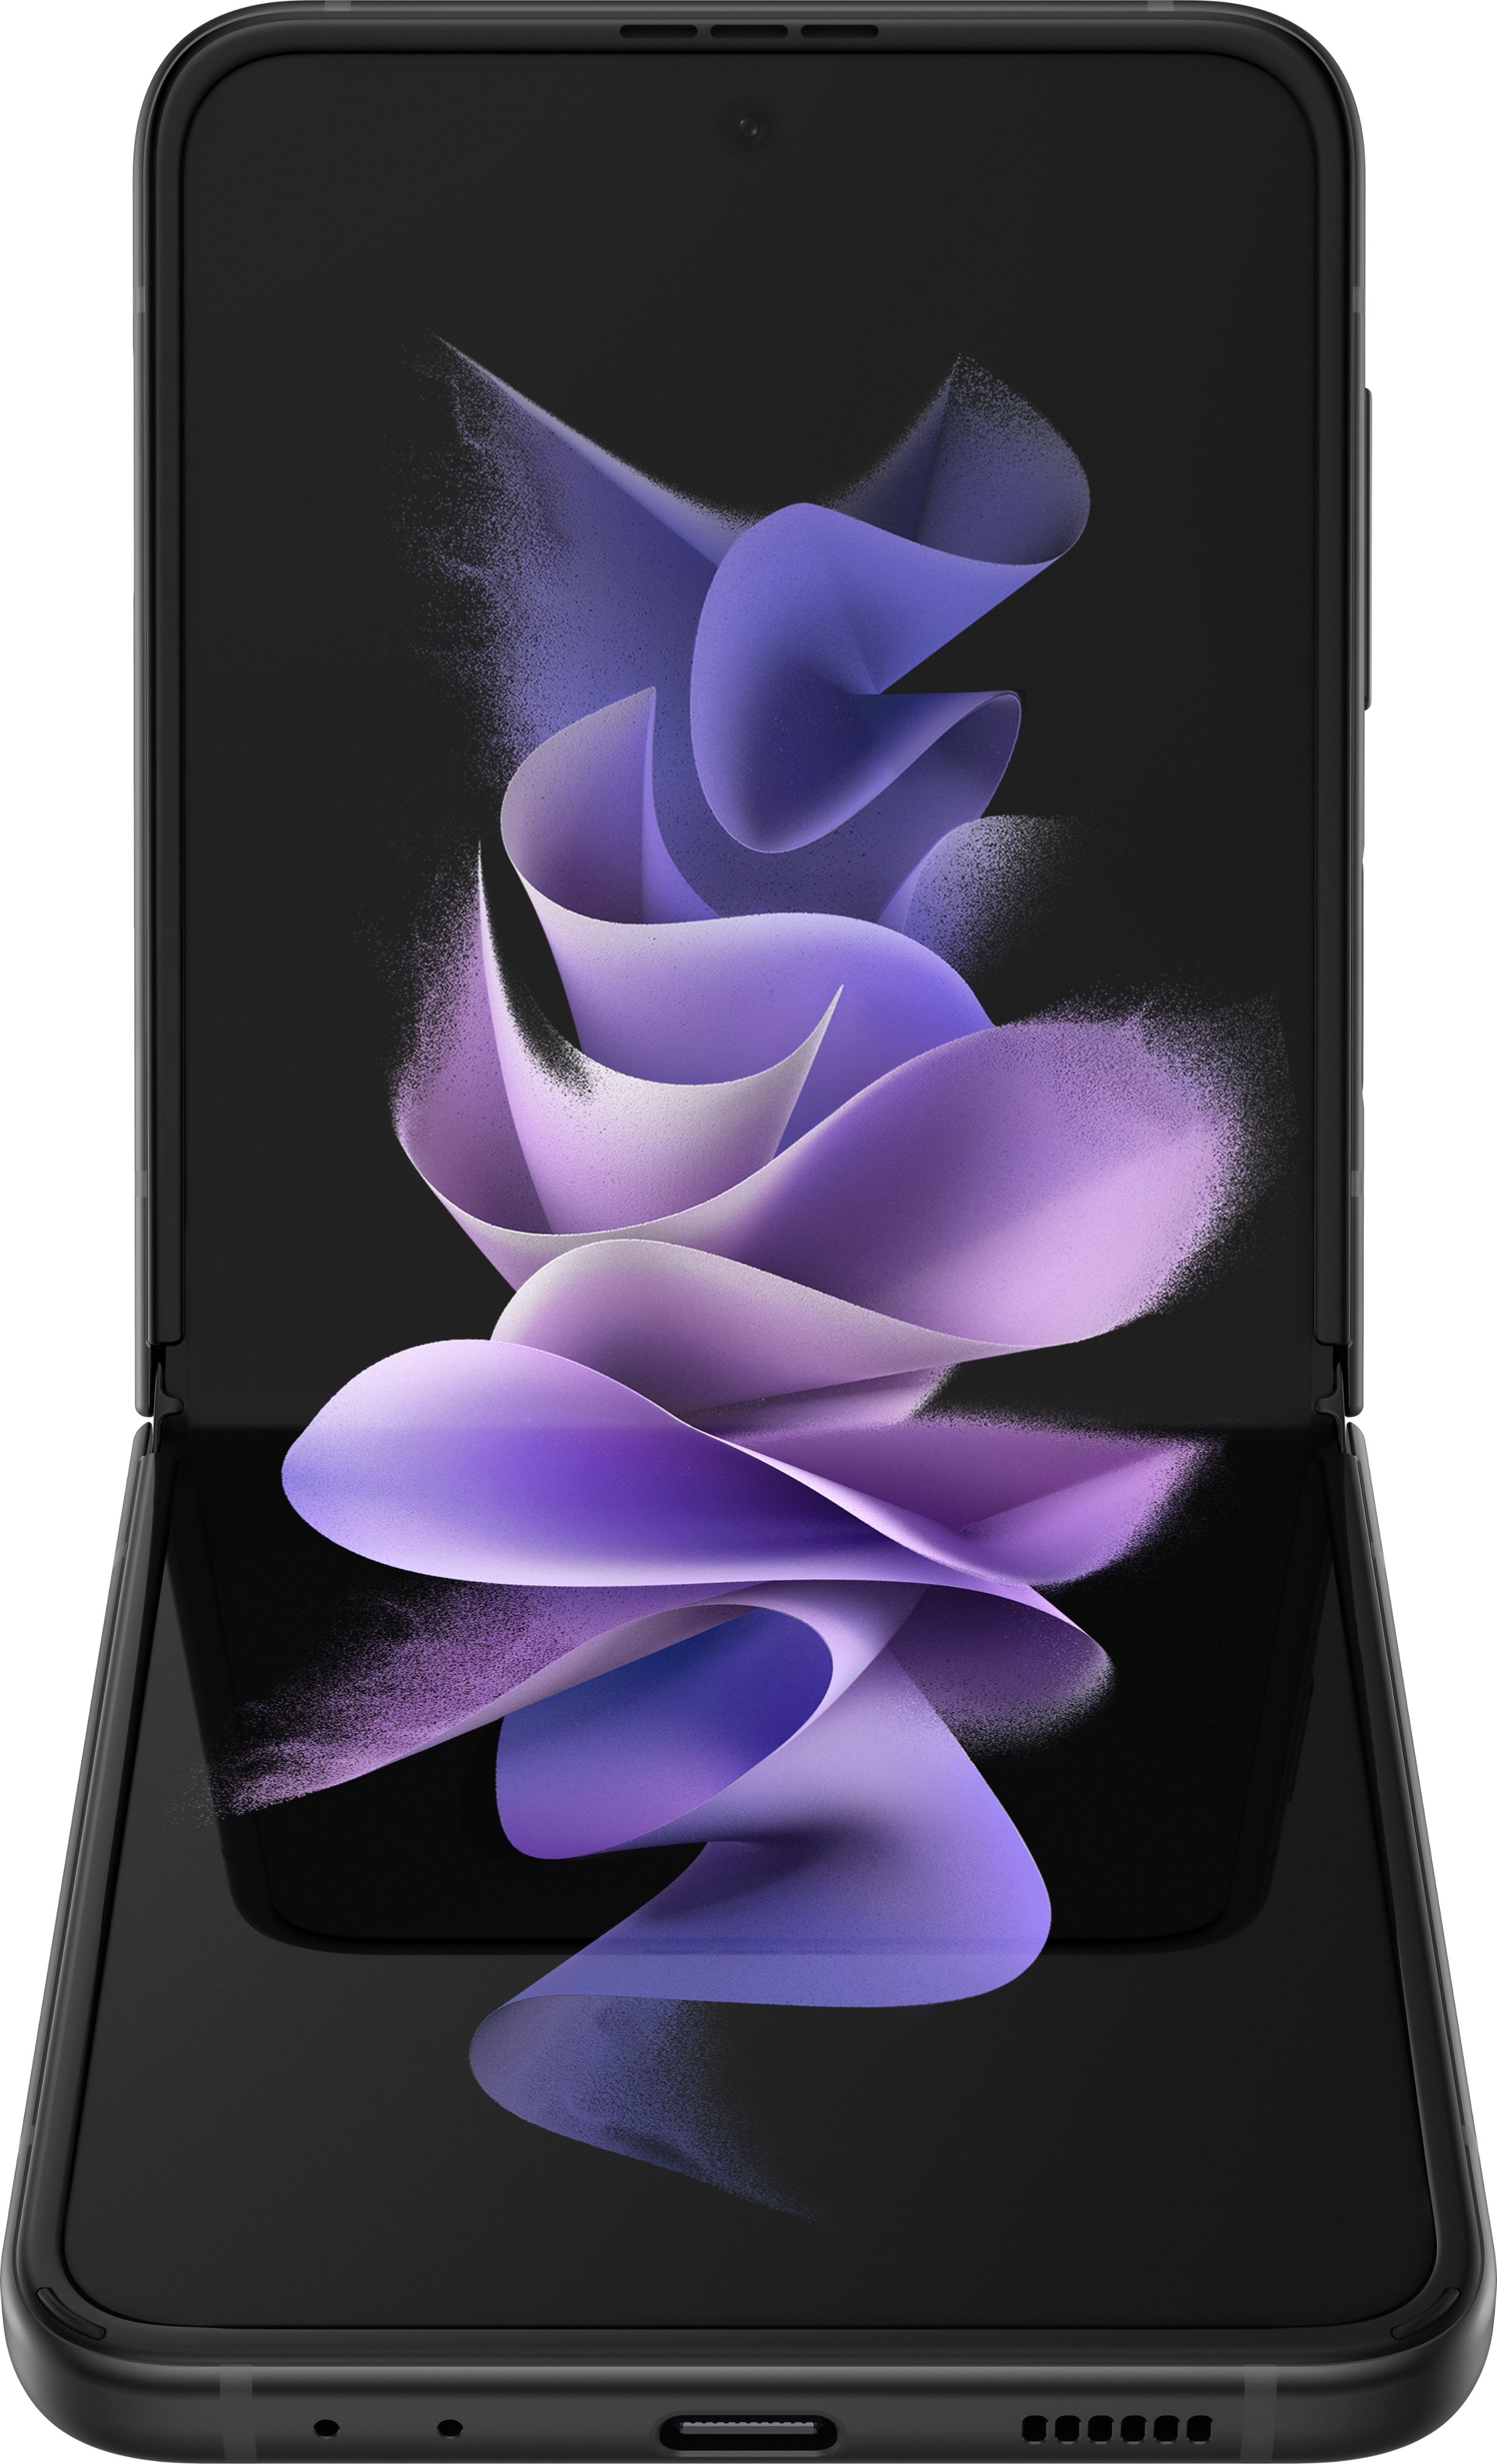 SAMSUNG Galaxy Z Flip 3 5G Cell Phone, Factory Unlocked Android Smartphone,  128GB, Flex Mode, Super Steady Camera, Ultra Compact, US Version, Phantom